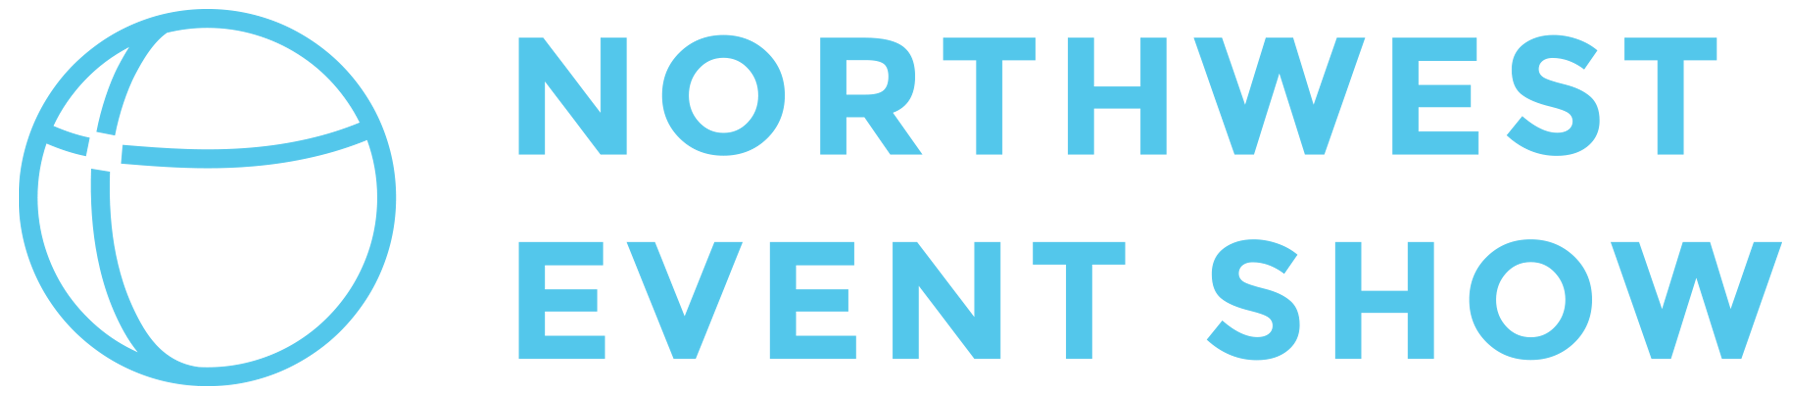 Northwest Event Show